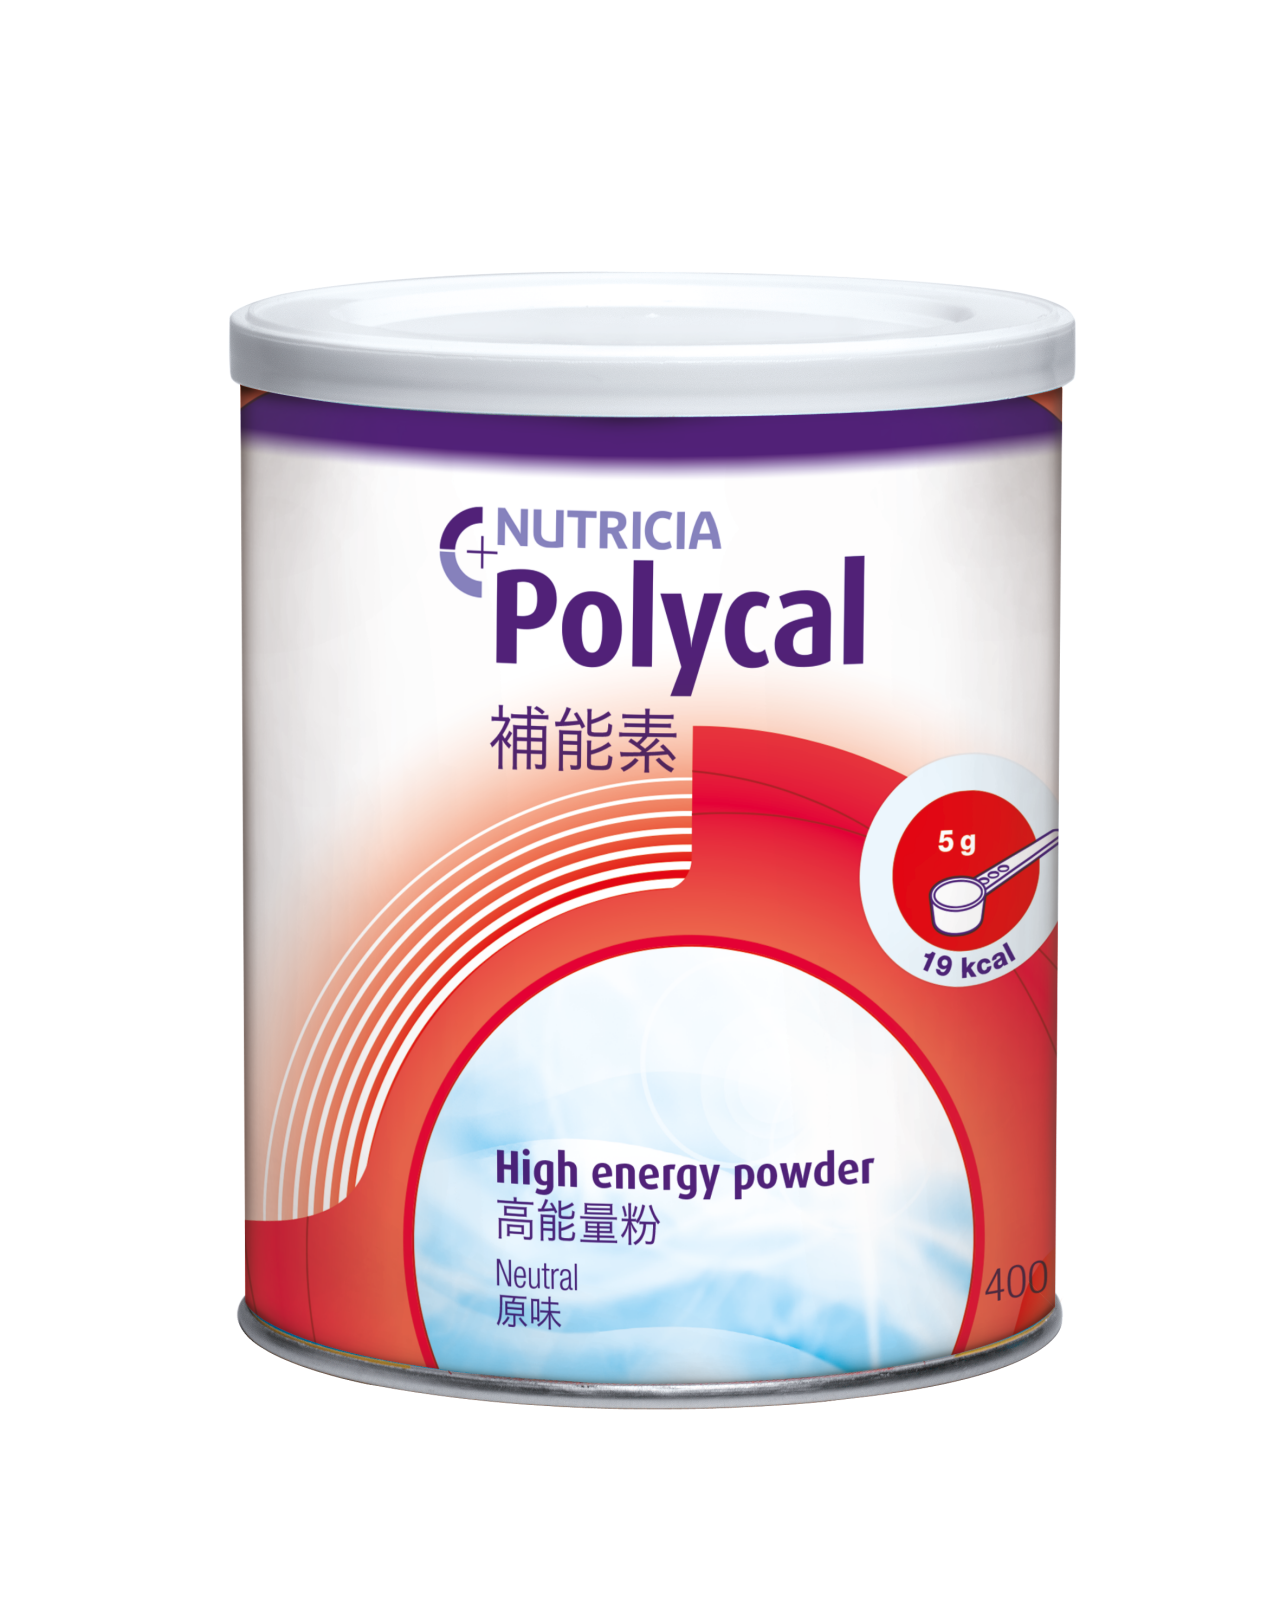 Polycal Powder